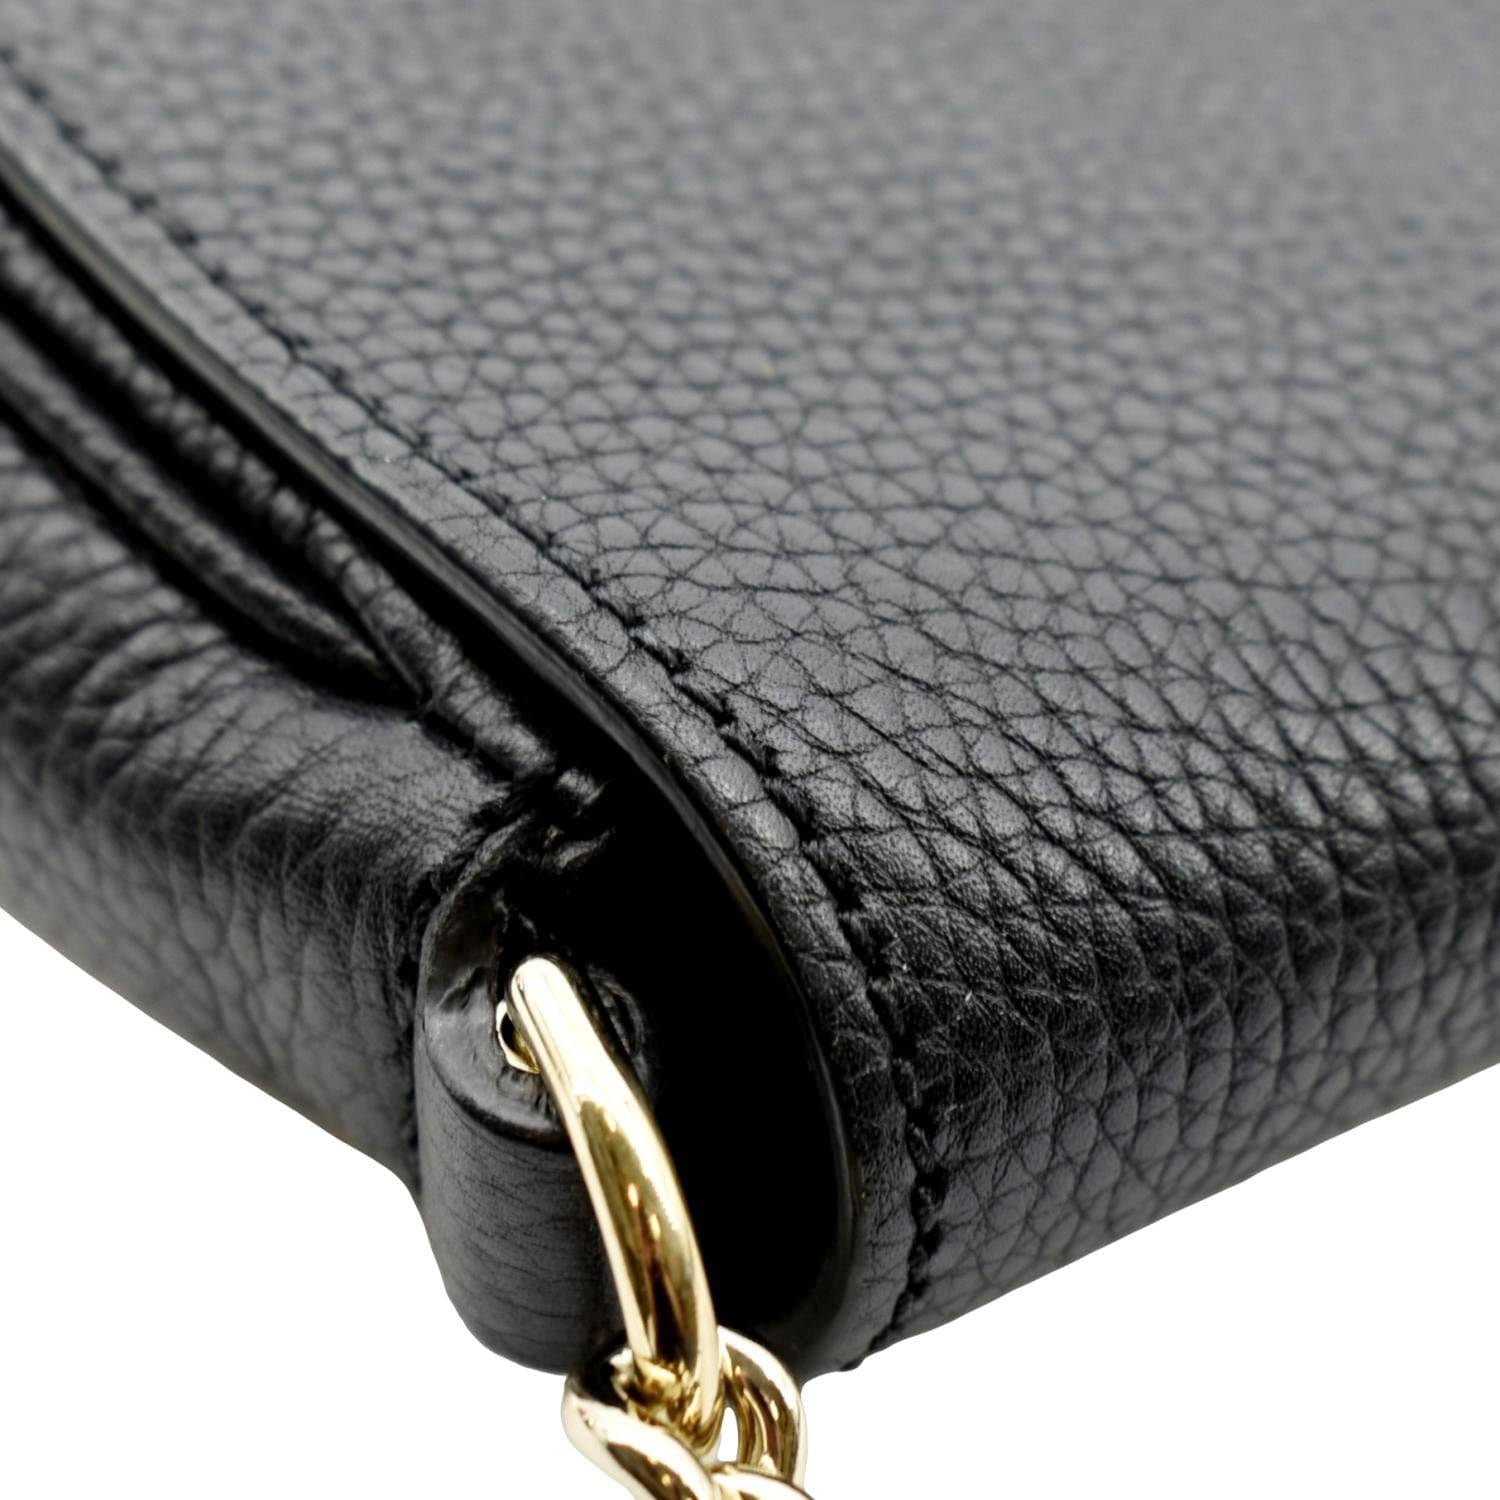 Gucci Soho Coin Purse Wallet Small Black